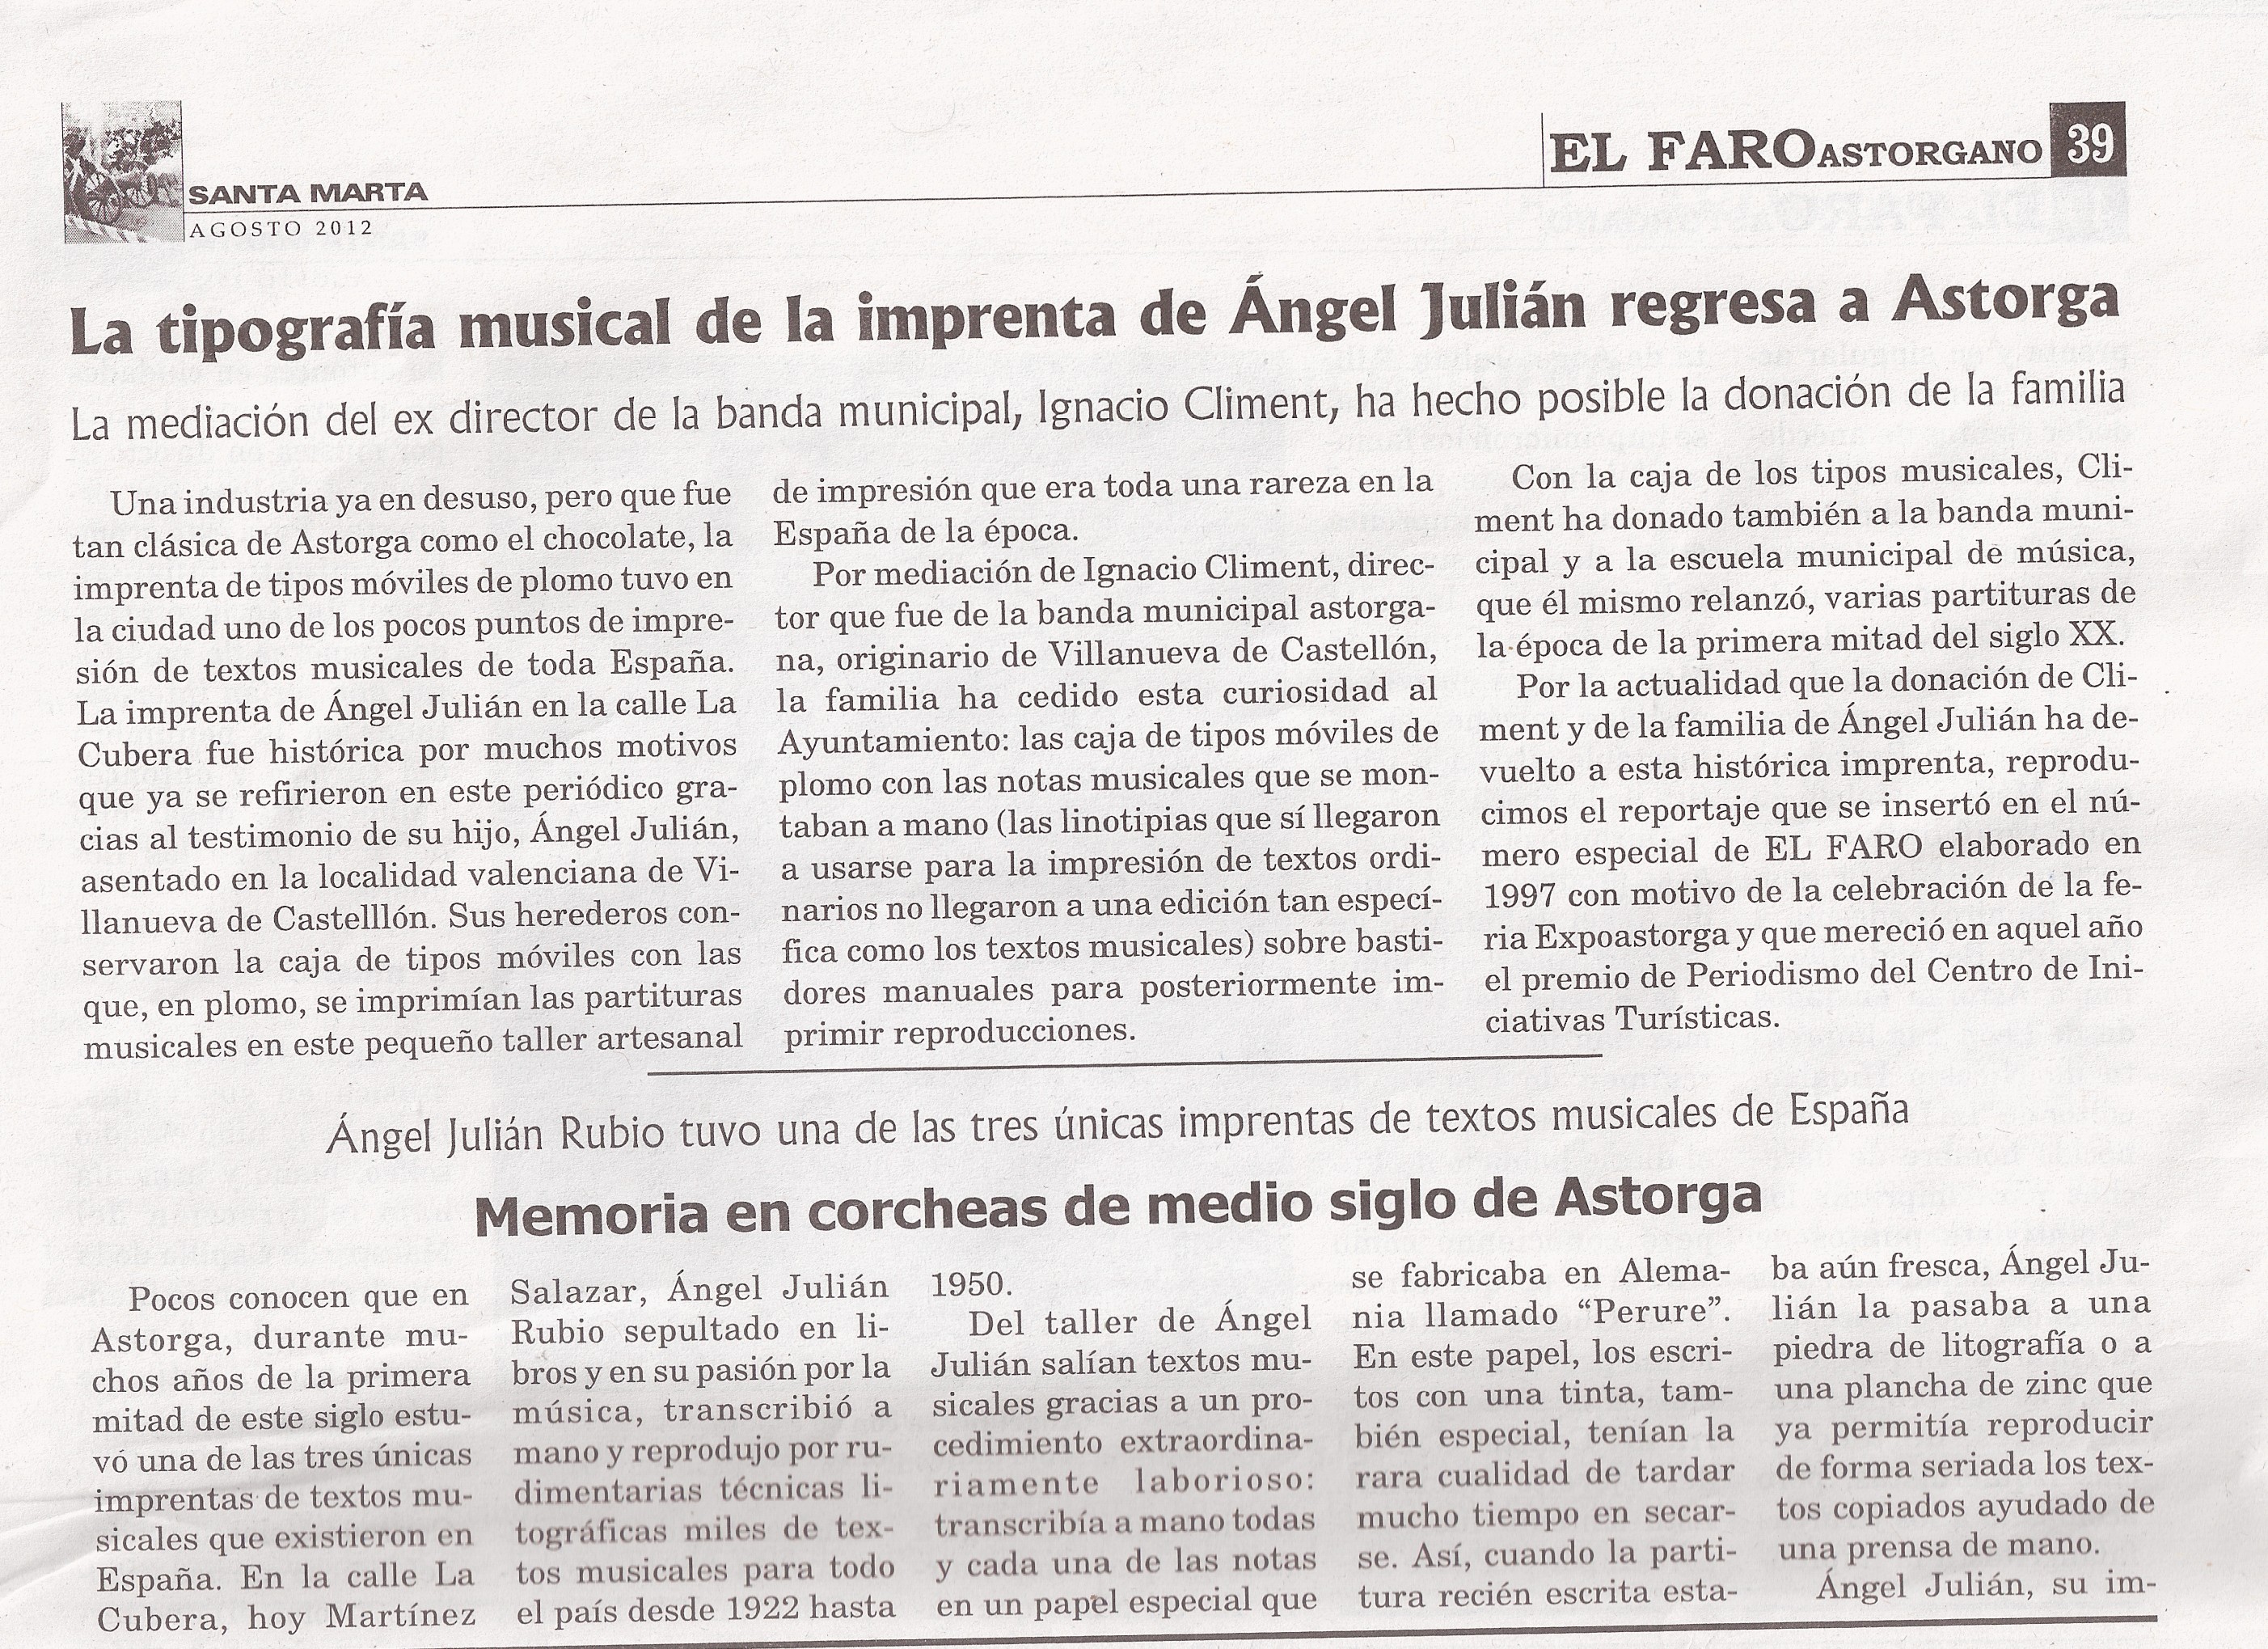 La imprenta de Angel Julian vuelve a Astorga